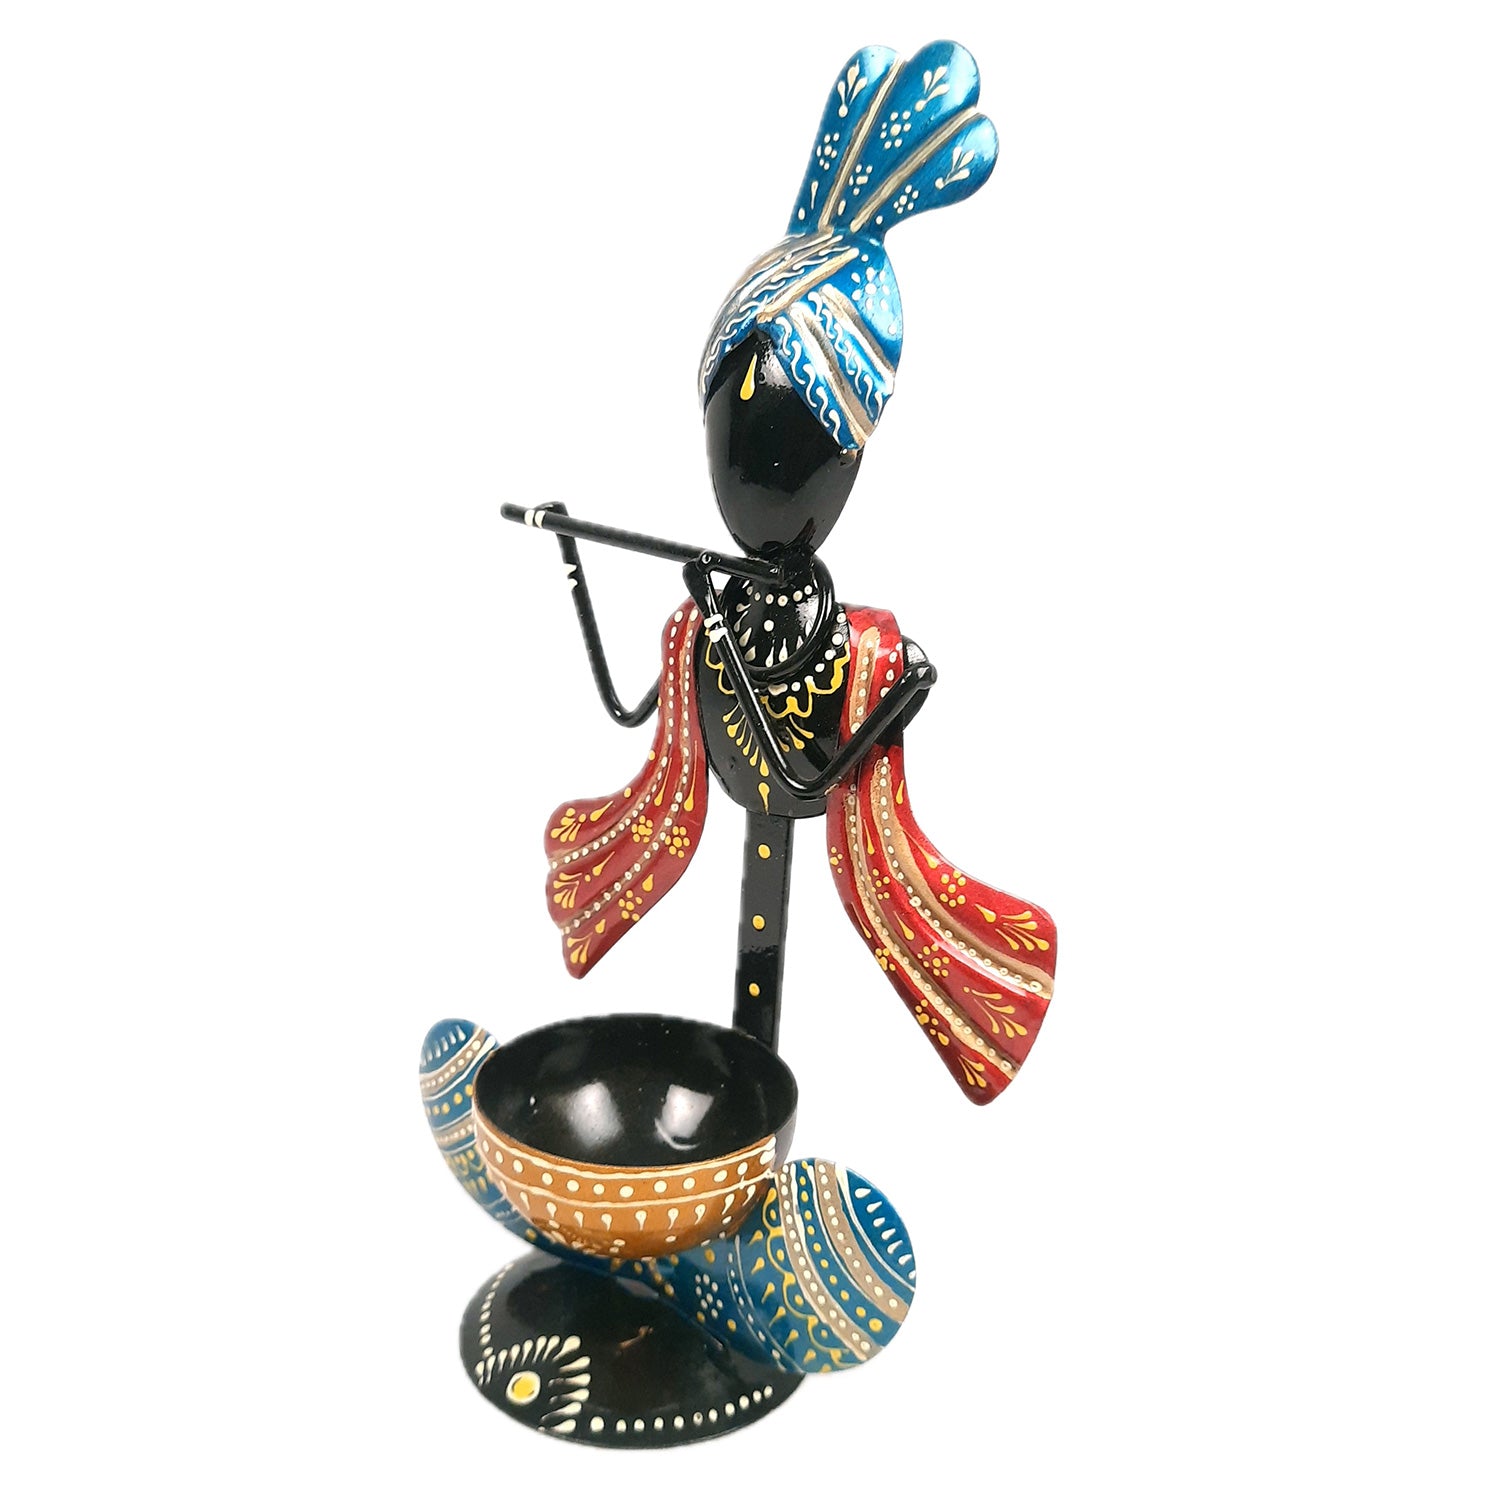 TeaLight Holder - Krishna Design | Candle T Light Holders Stand | Tea Light Candle Stands - For Home, Table, Living Room, Dining room, Bedroom Decor | For Diwali Decoration & Gifts - 10 Inch - Apkamart #Color_Black